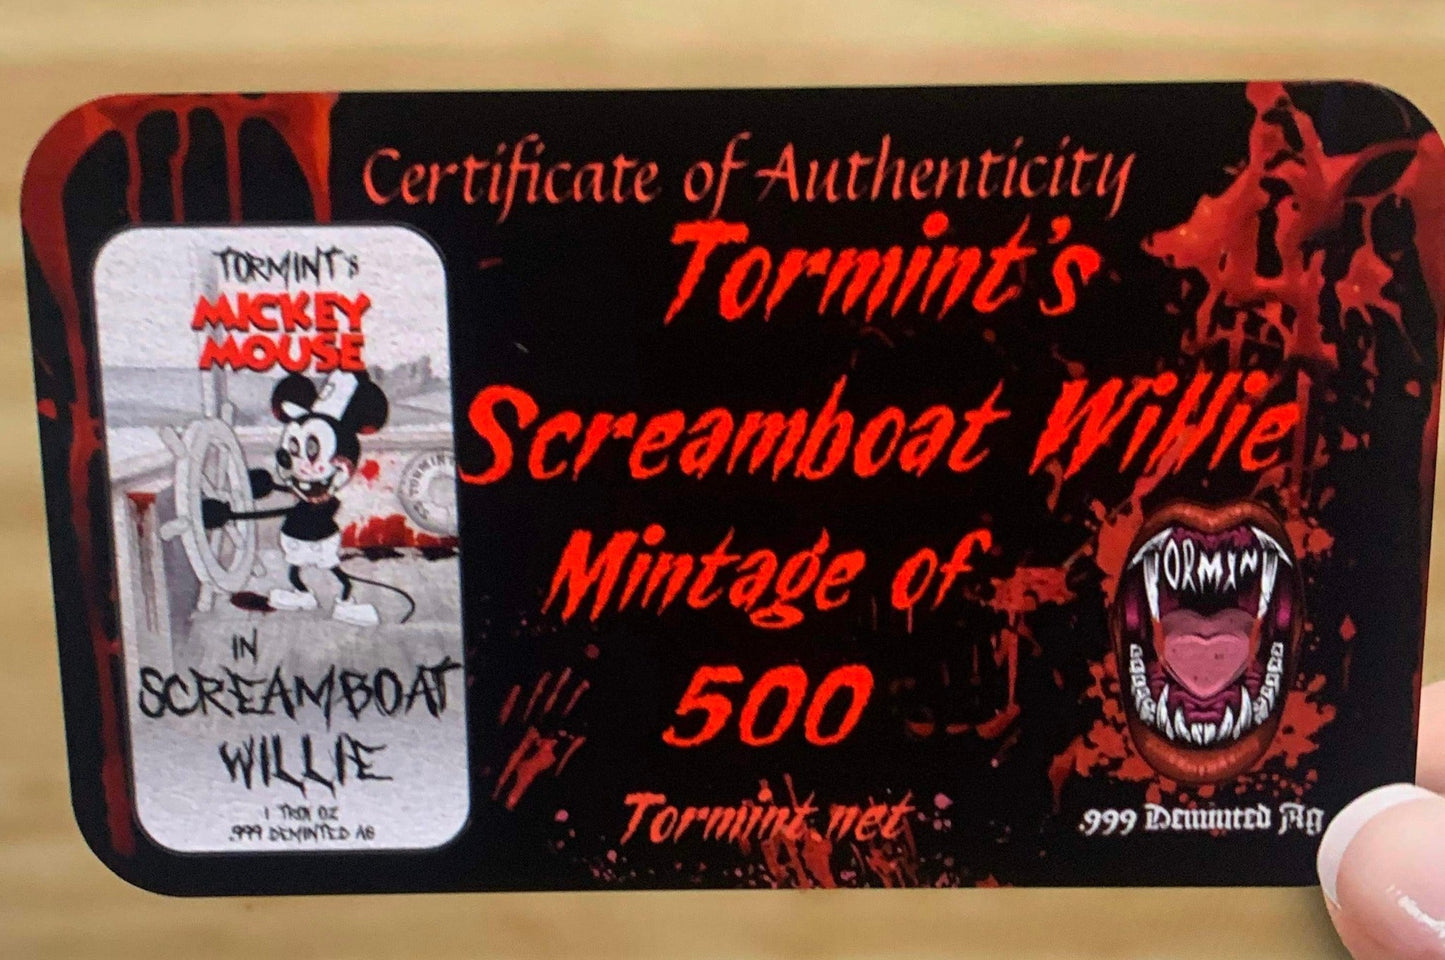 Screamboat Willie Color 1 oz Silberbarren - 500 mintage